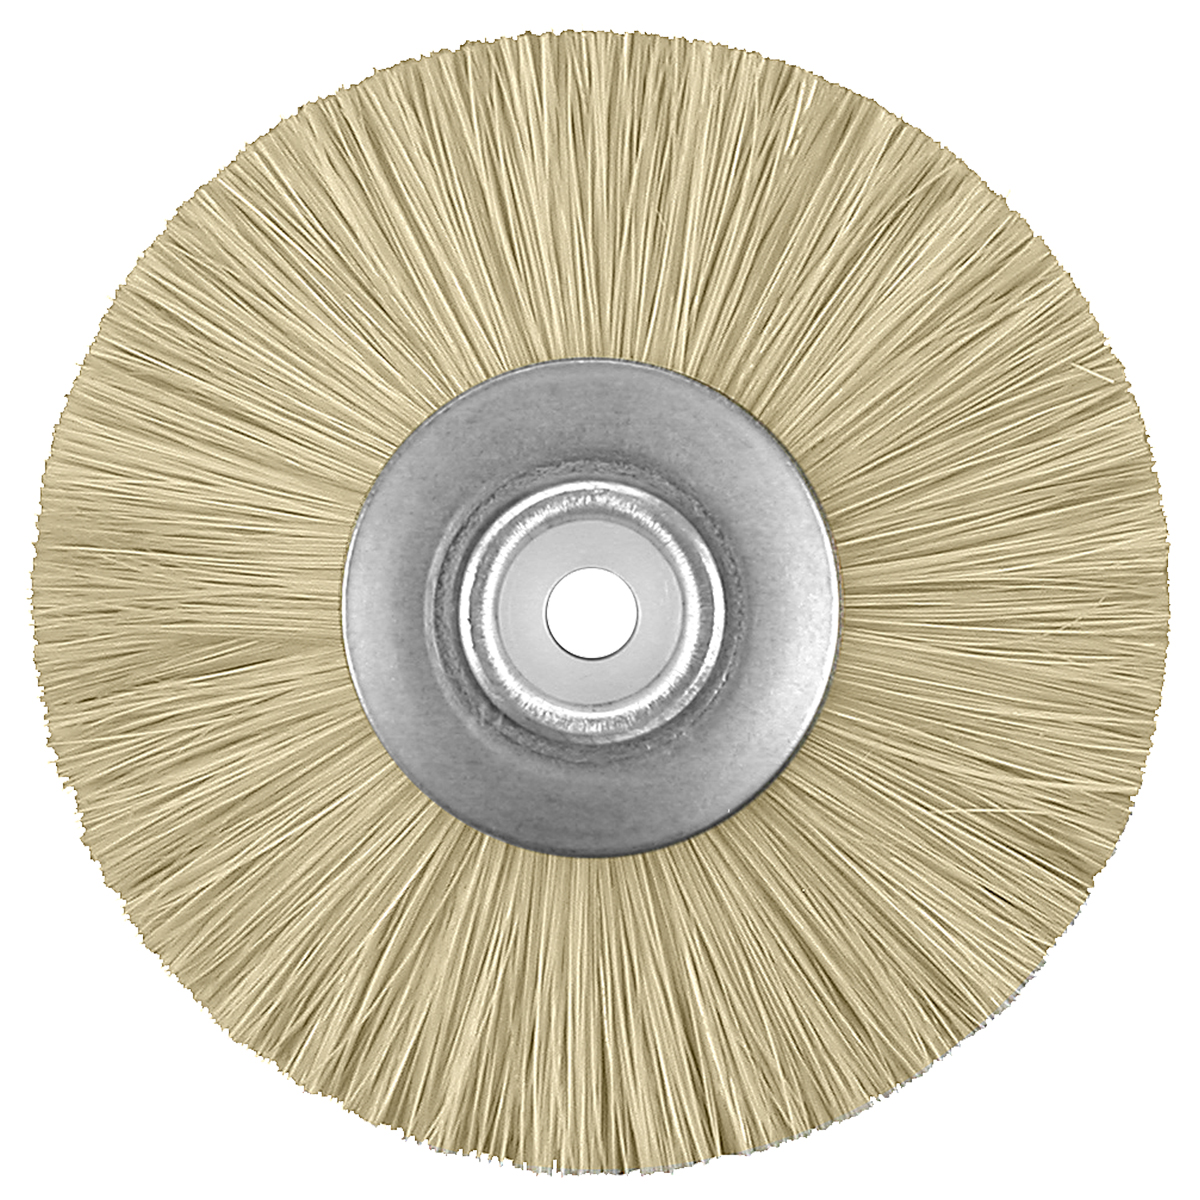 Slimline brush bristles, Ø 49 mm, Chungking bristles, white, metal core and plastic hub